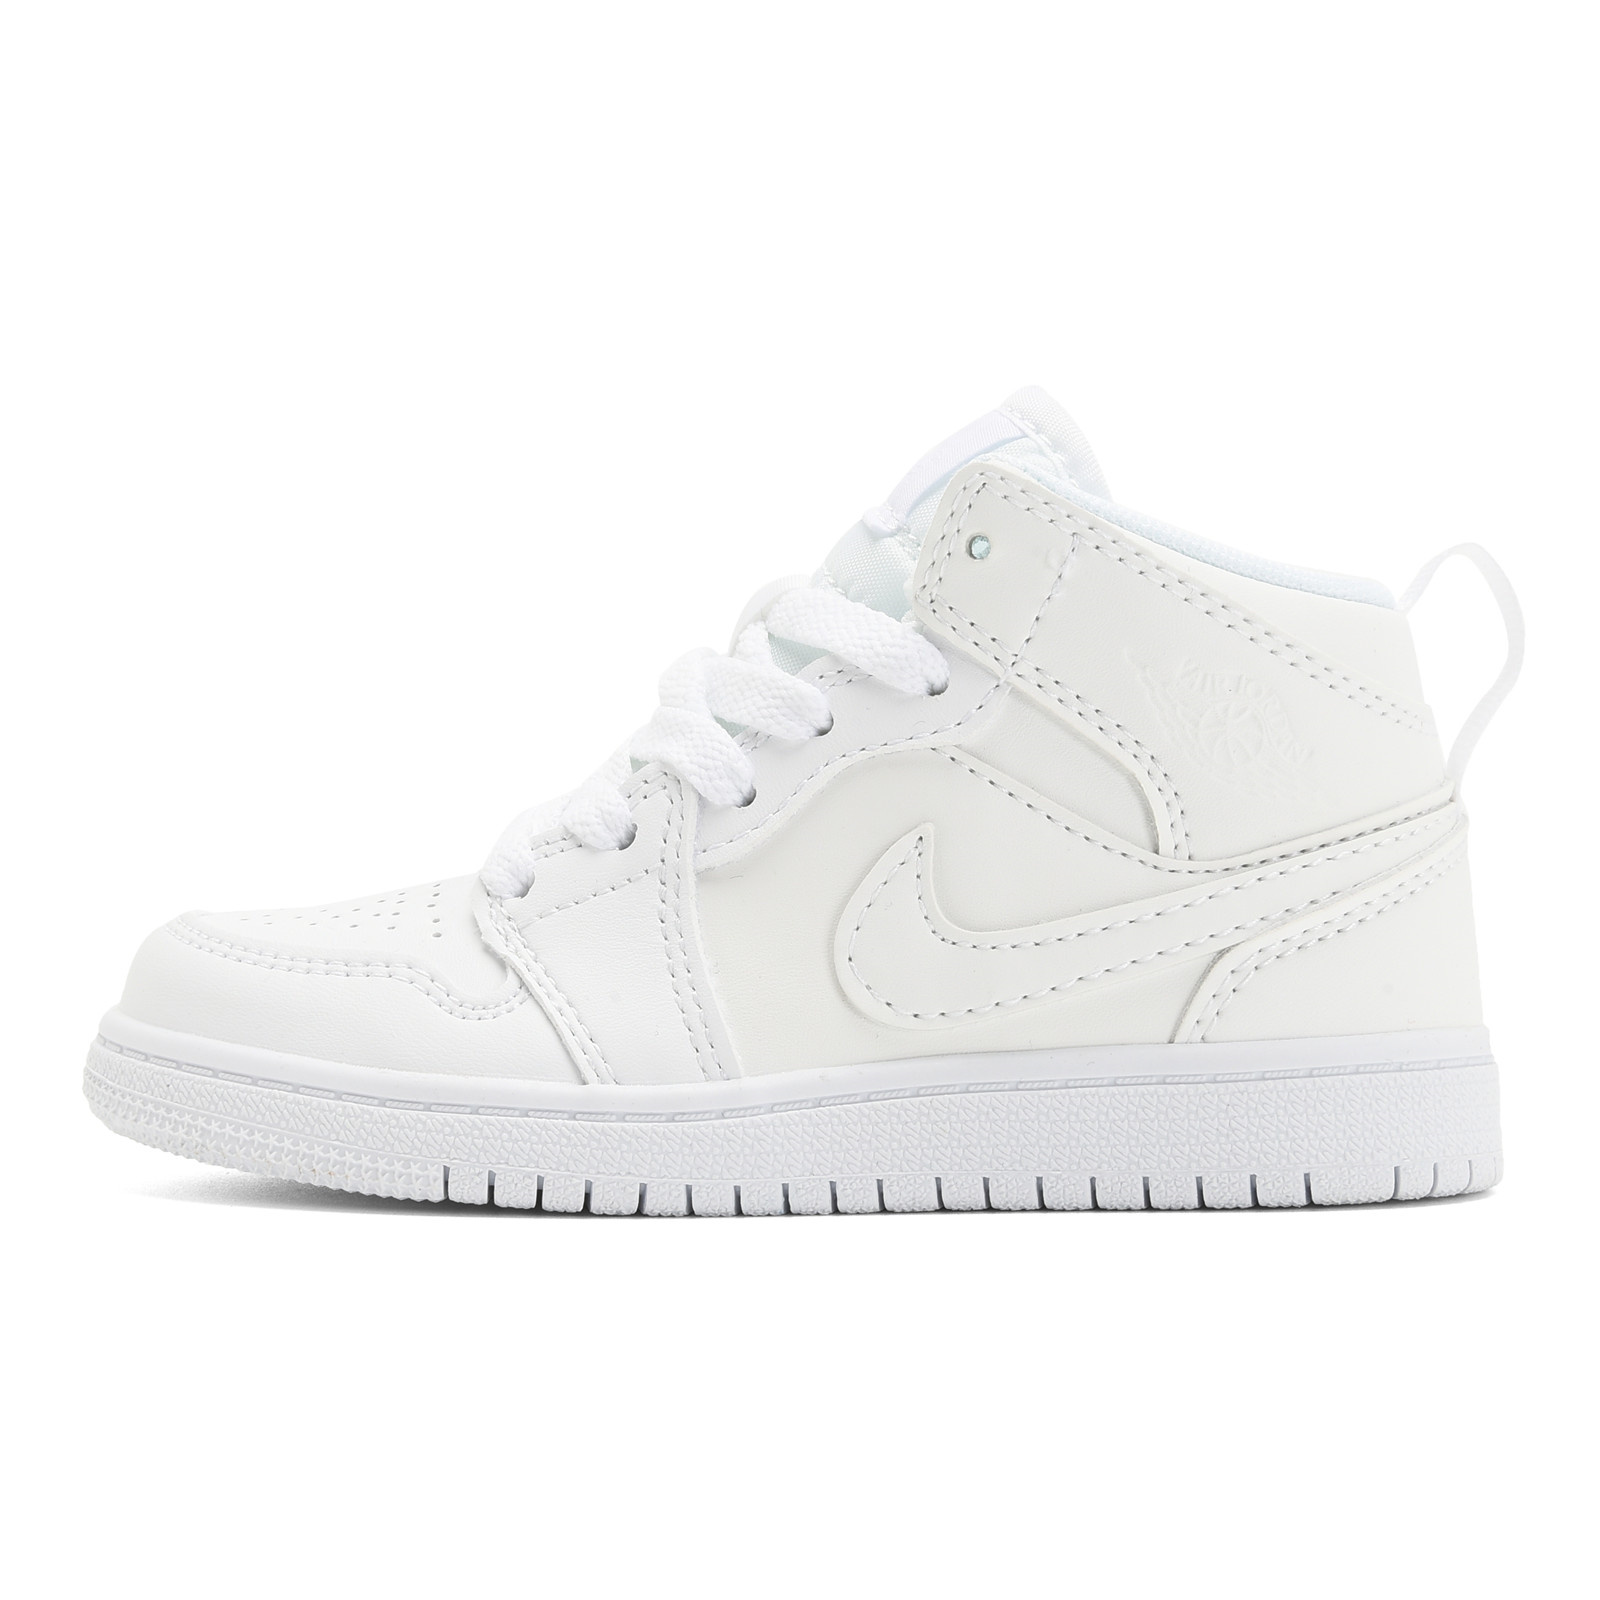 Youth Running Weapon Air Jordan 1 White Shoes 0111